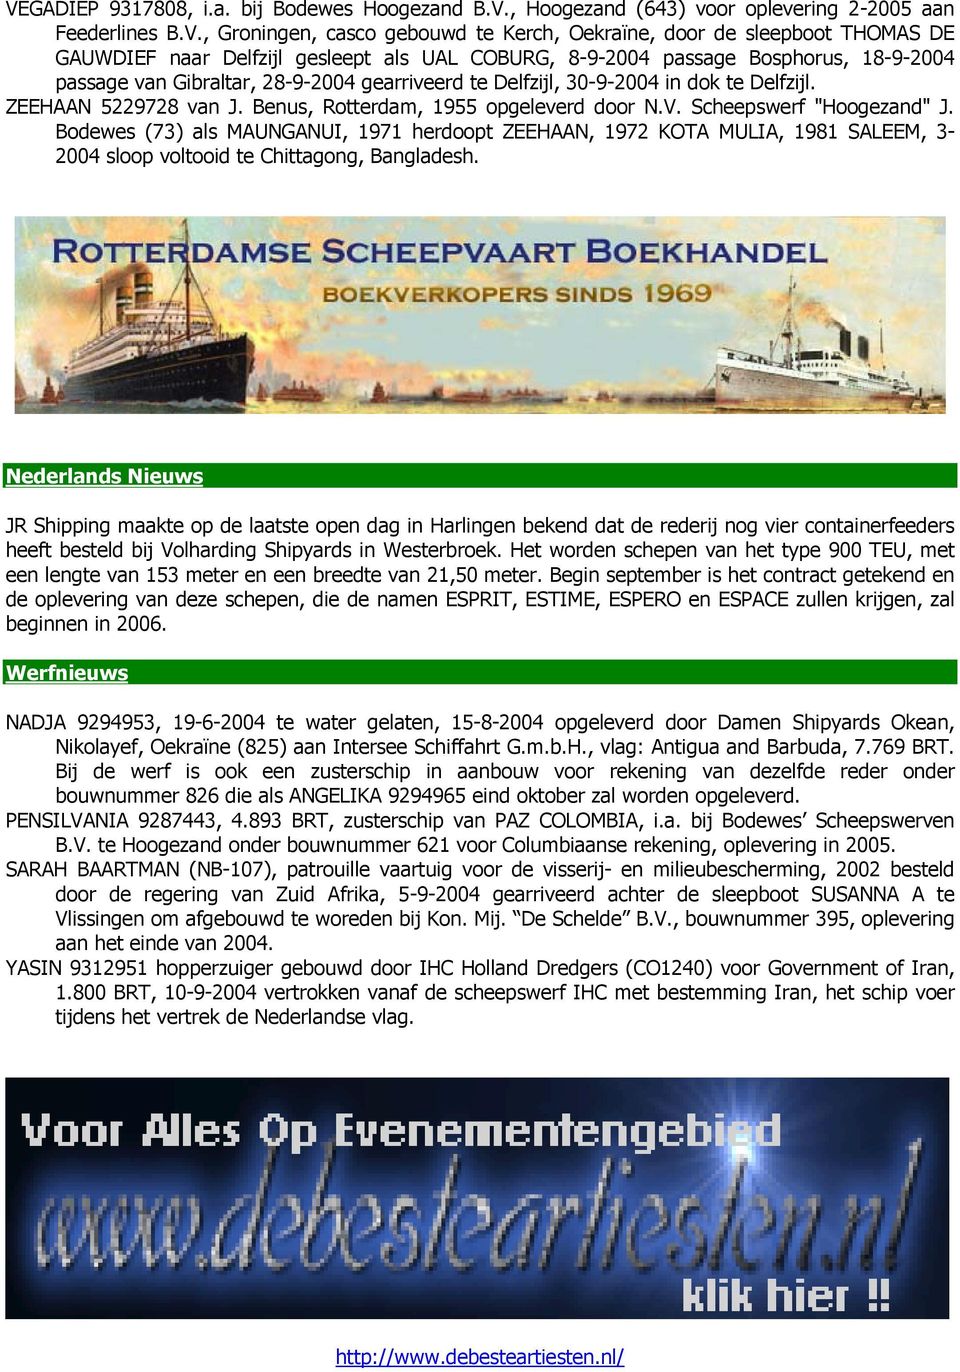 Benus, Rotterdam, 1955 opgeleverd door N.V. Scheepswerf "Hoogezand" J. Bodewes (73) als MAUNGANUI, 1971 herdoopt ZEEHAAN, 1972 KOTA MULIA, 1981 SALEEM, 3-2004 sloop voltooid te Chittagong, Bangladesh.